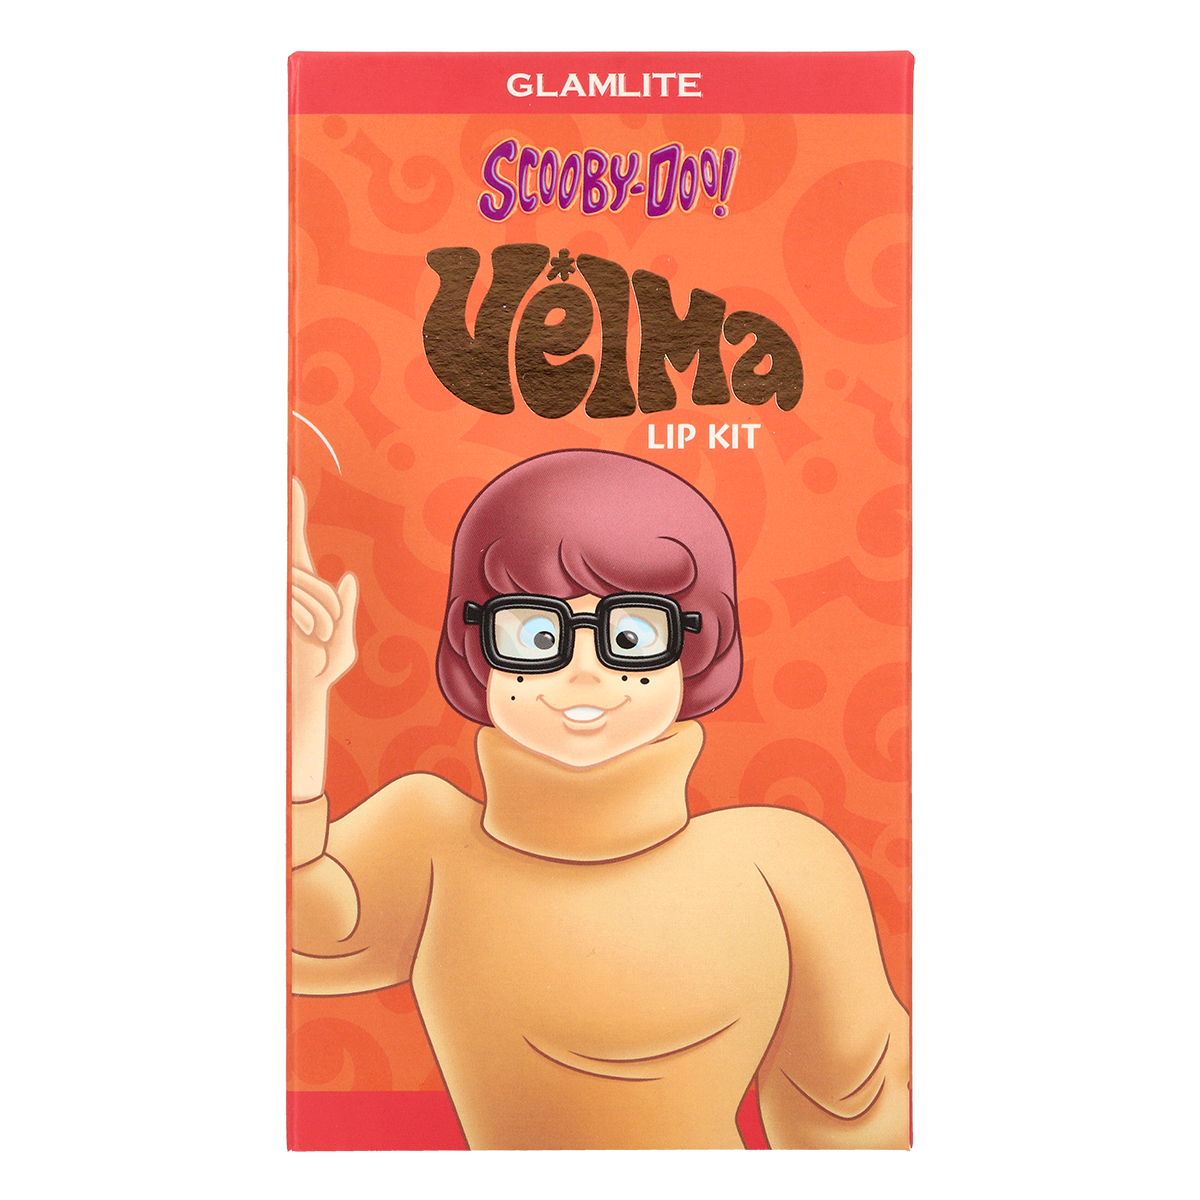 Scooby-Doo x Glamlite Velma Lip Kit